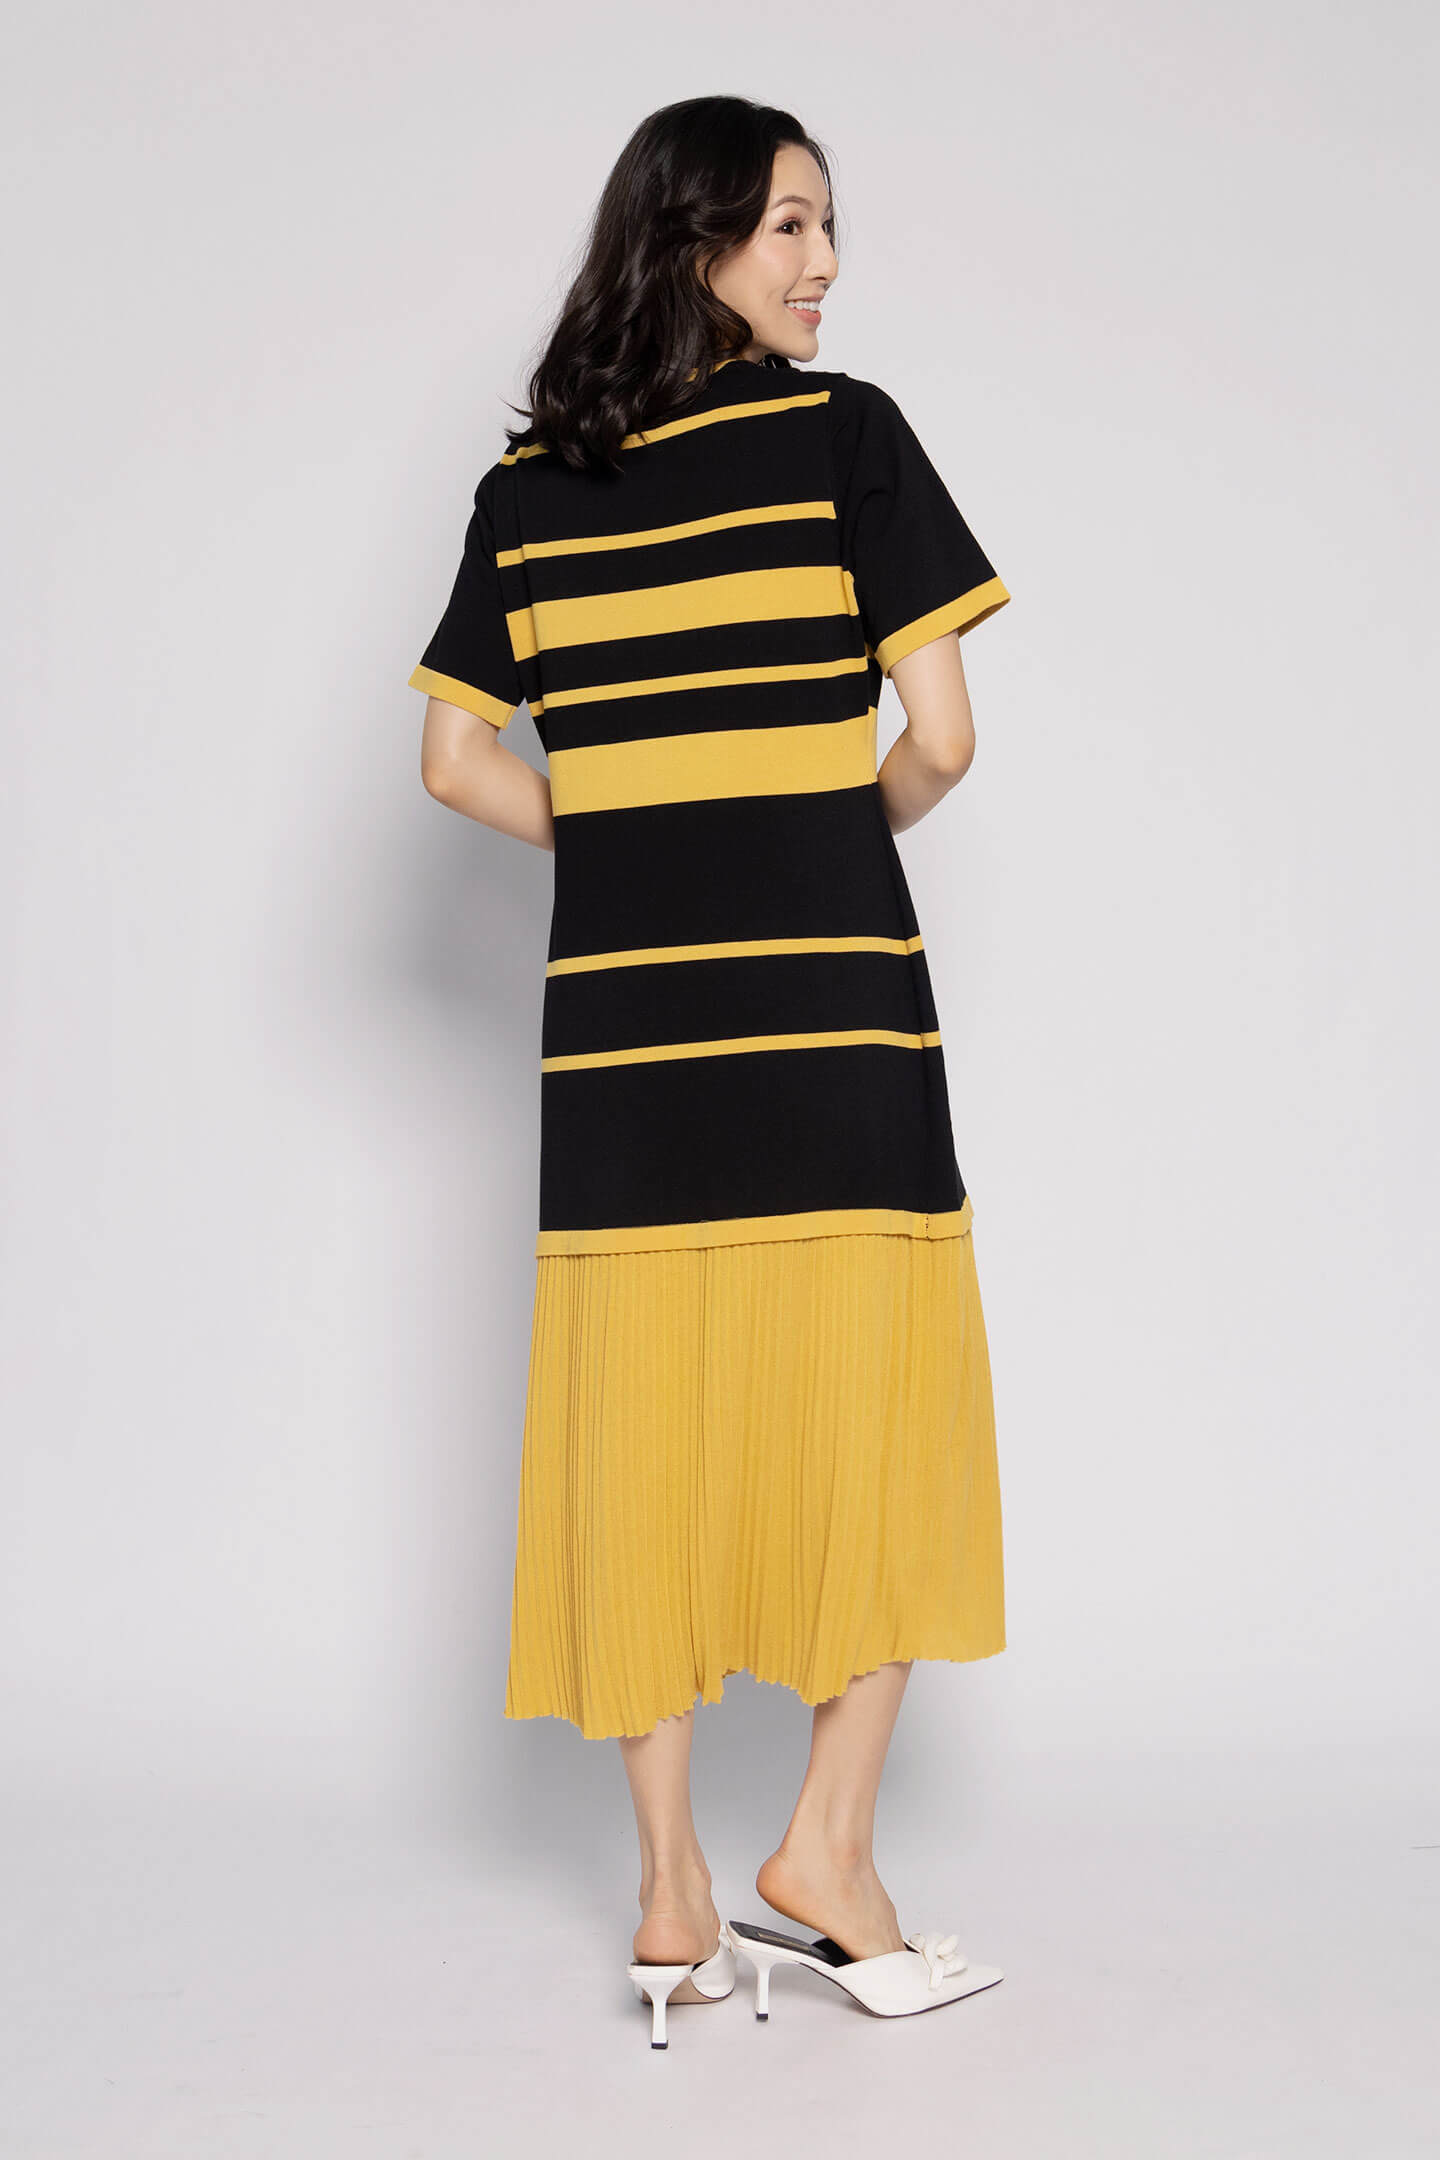 Josephine Knit Dress in Black Yellow